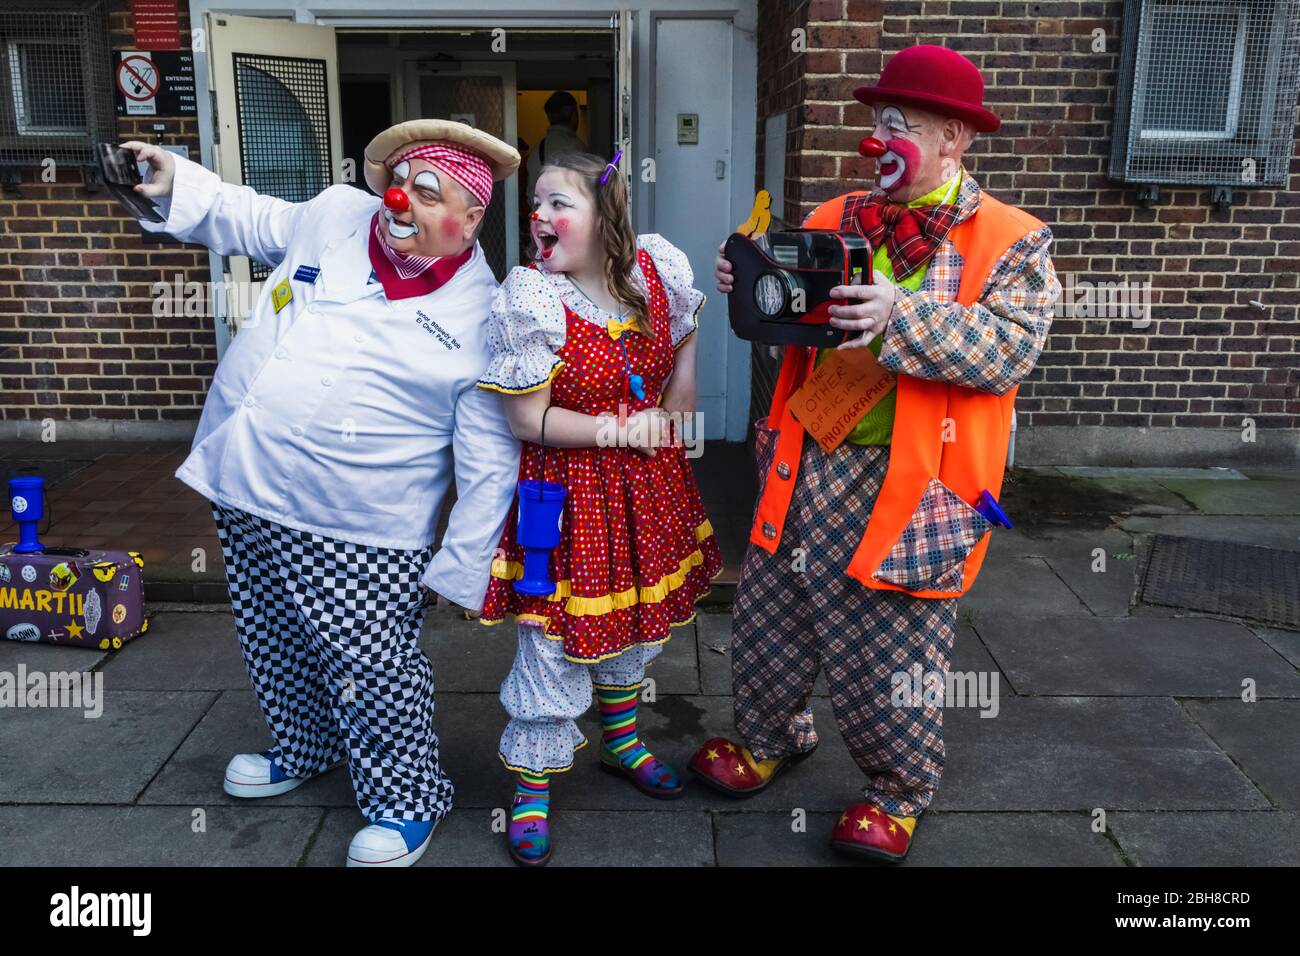 Inghilterra, Londra, l annuale Grimaldi clown servizio di chiesa in chiesa di Tutti i Santi, Haggerston, gruppo di clowns tenendo Selfie foto Foto Stock